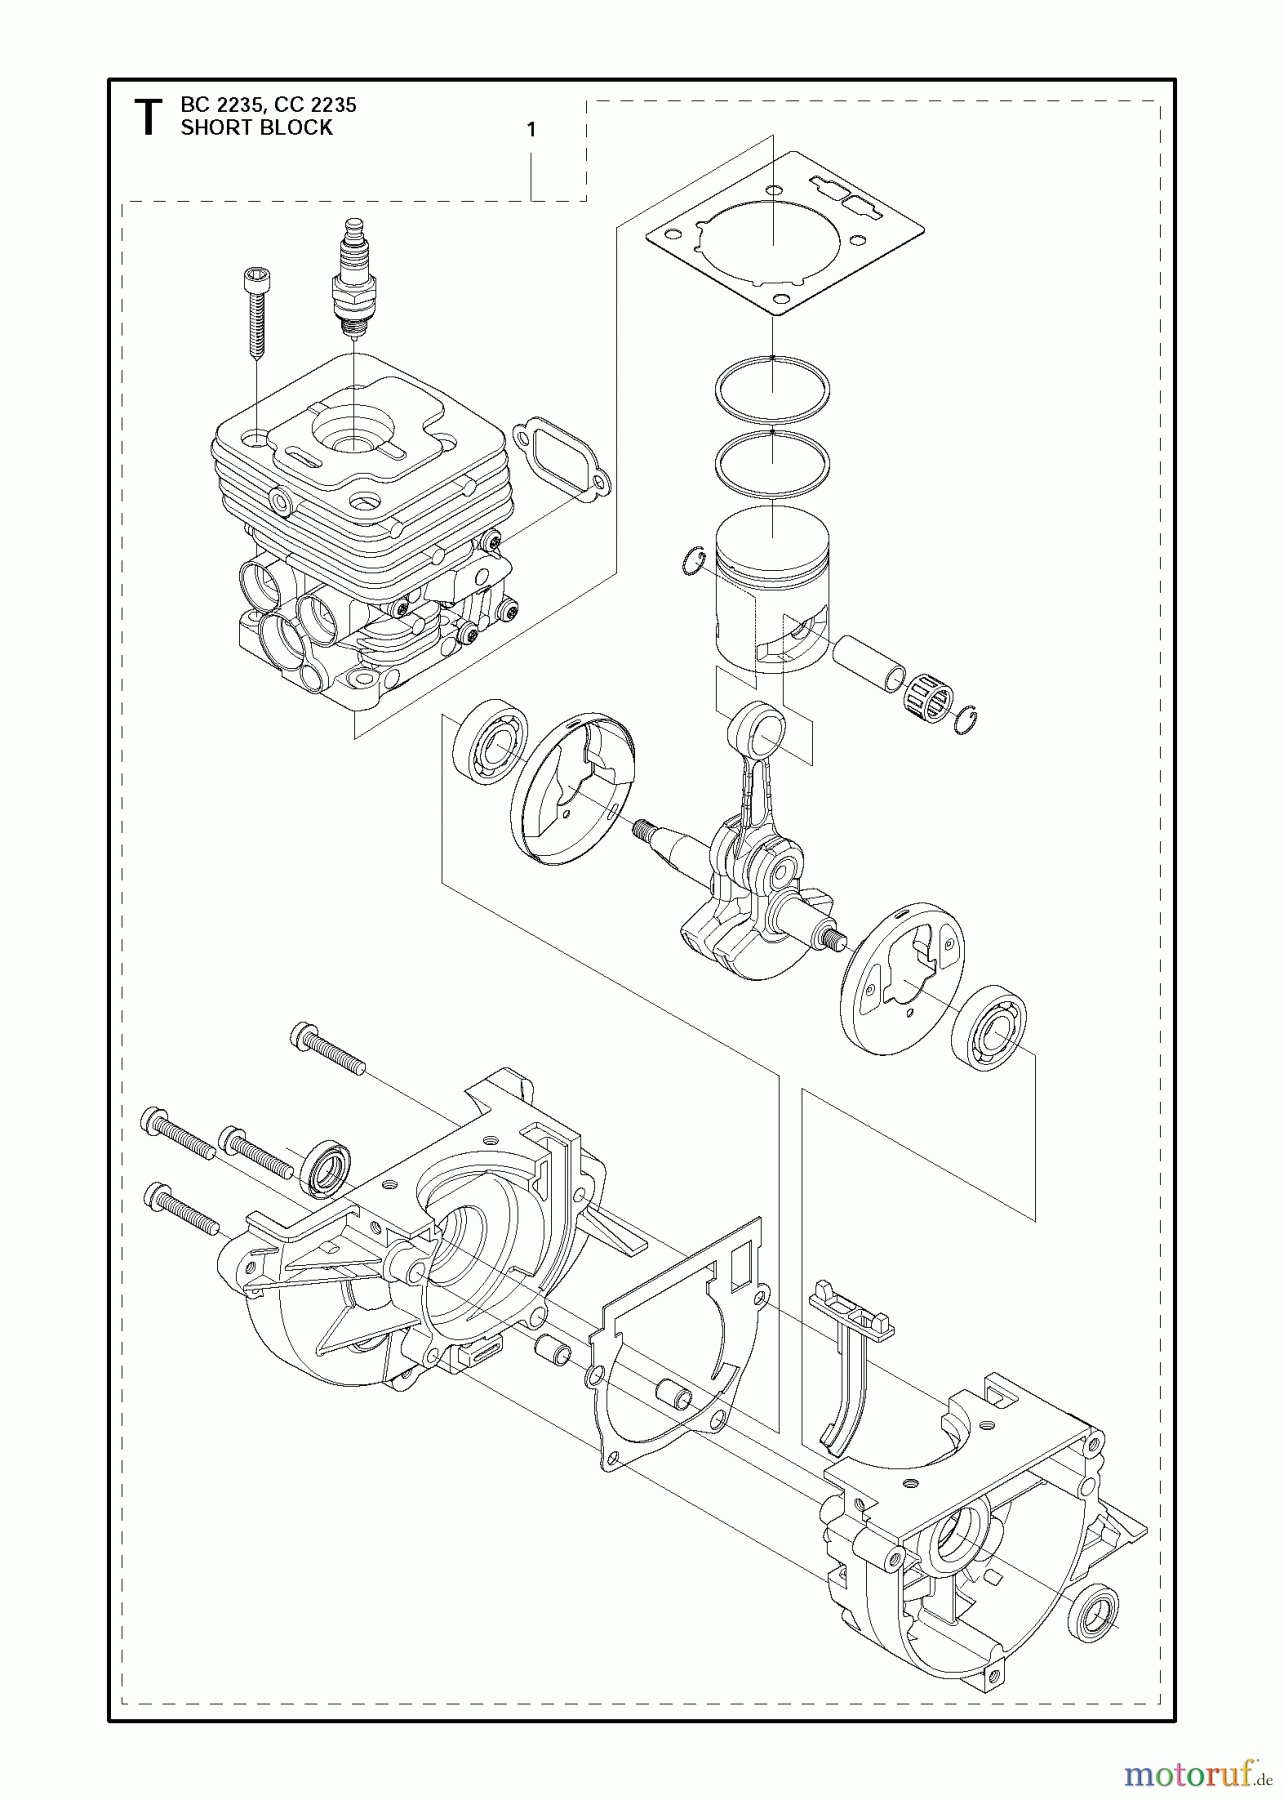  Jonsered Motorsensen, Trimmer BC2235 - Jonsered Brushcutter (2011-02) SHORT BLOCK